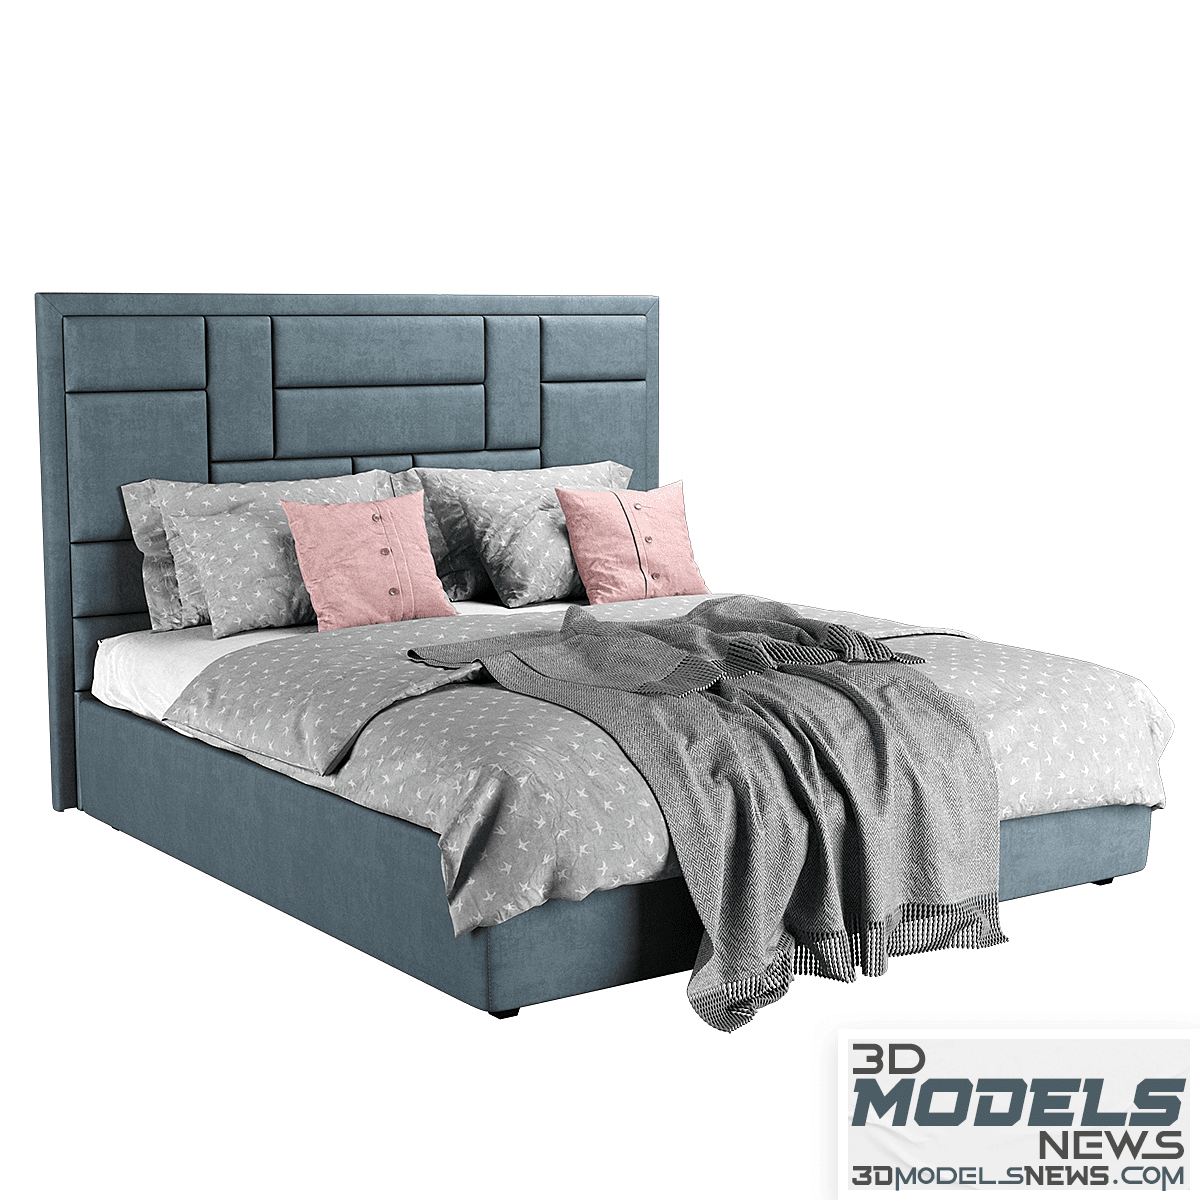 Olla kros sola bed model 2